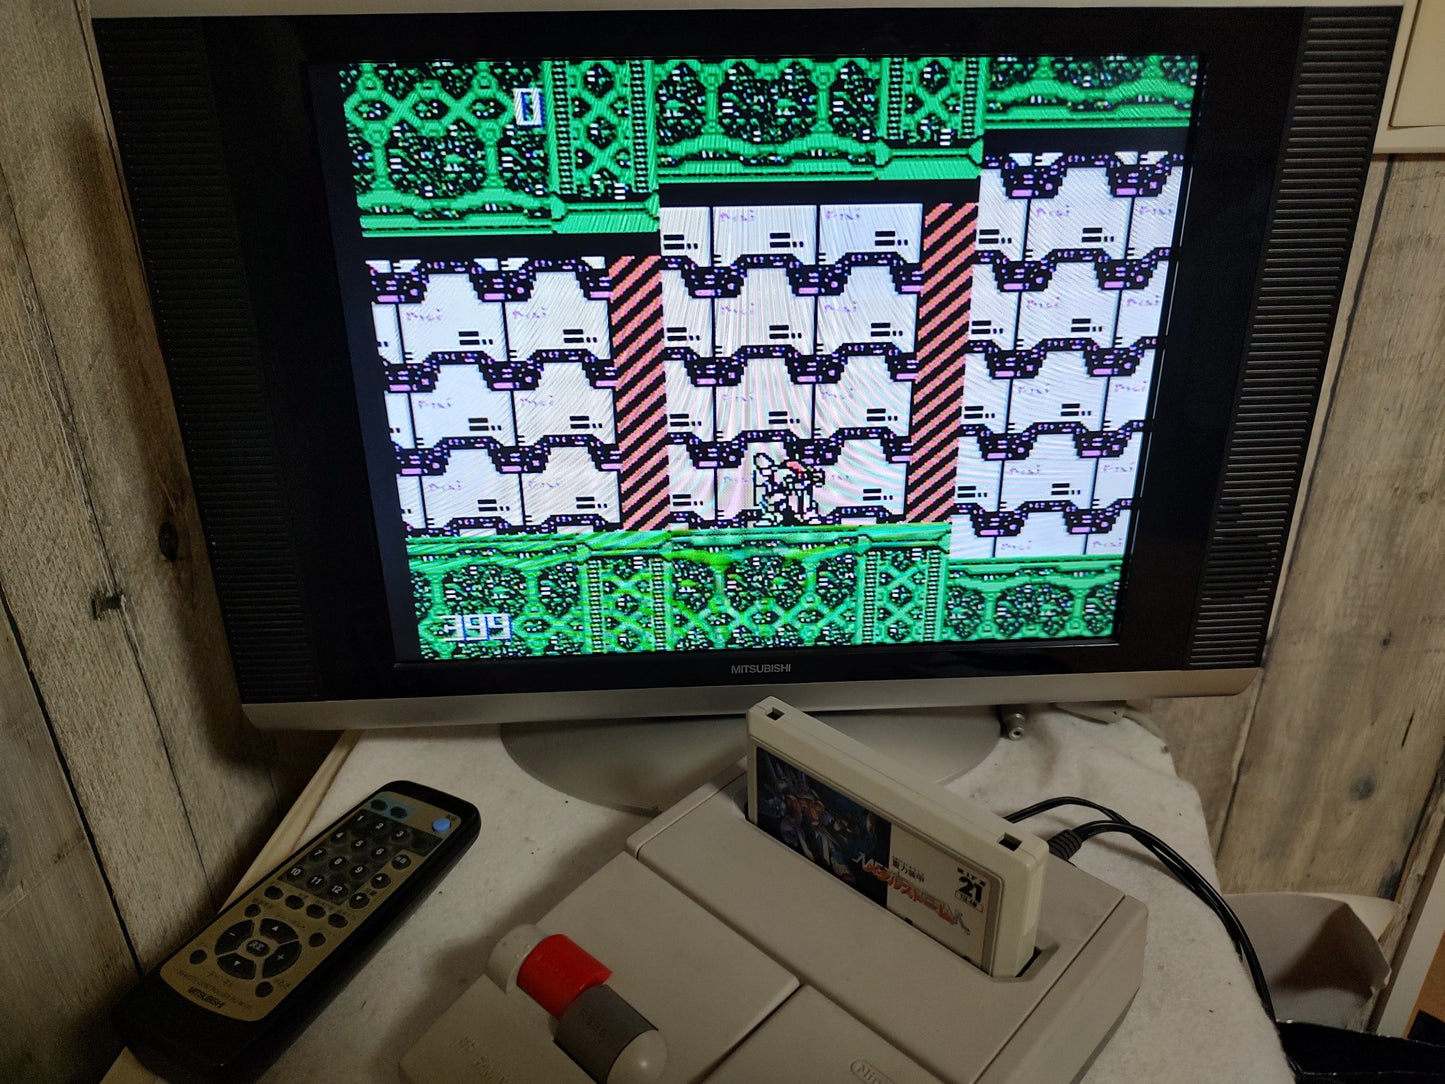 Juuryoku Soukou Metal Storm Nintendo FAMICOM(NES) Cartridge and Manual set-f1018